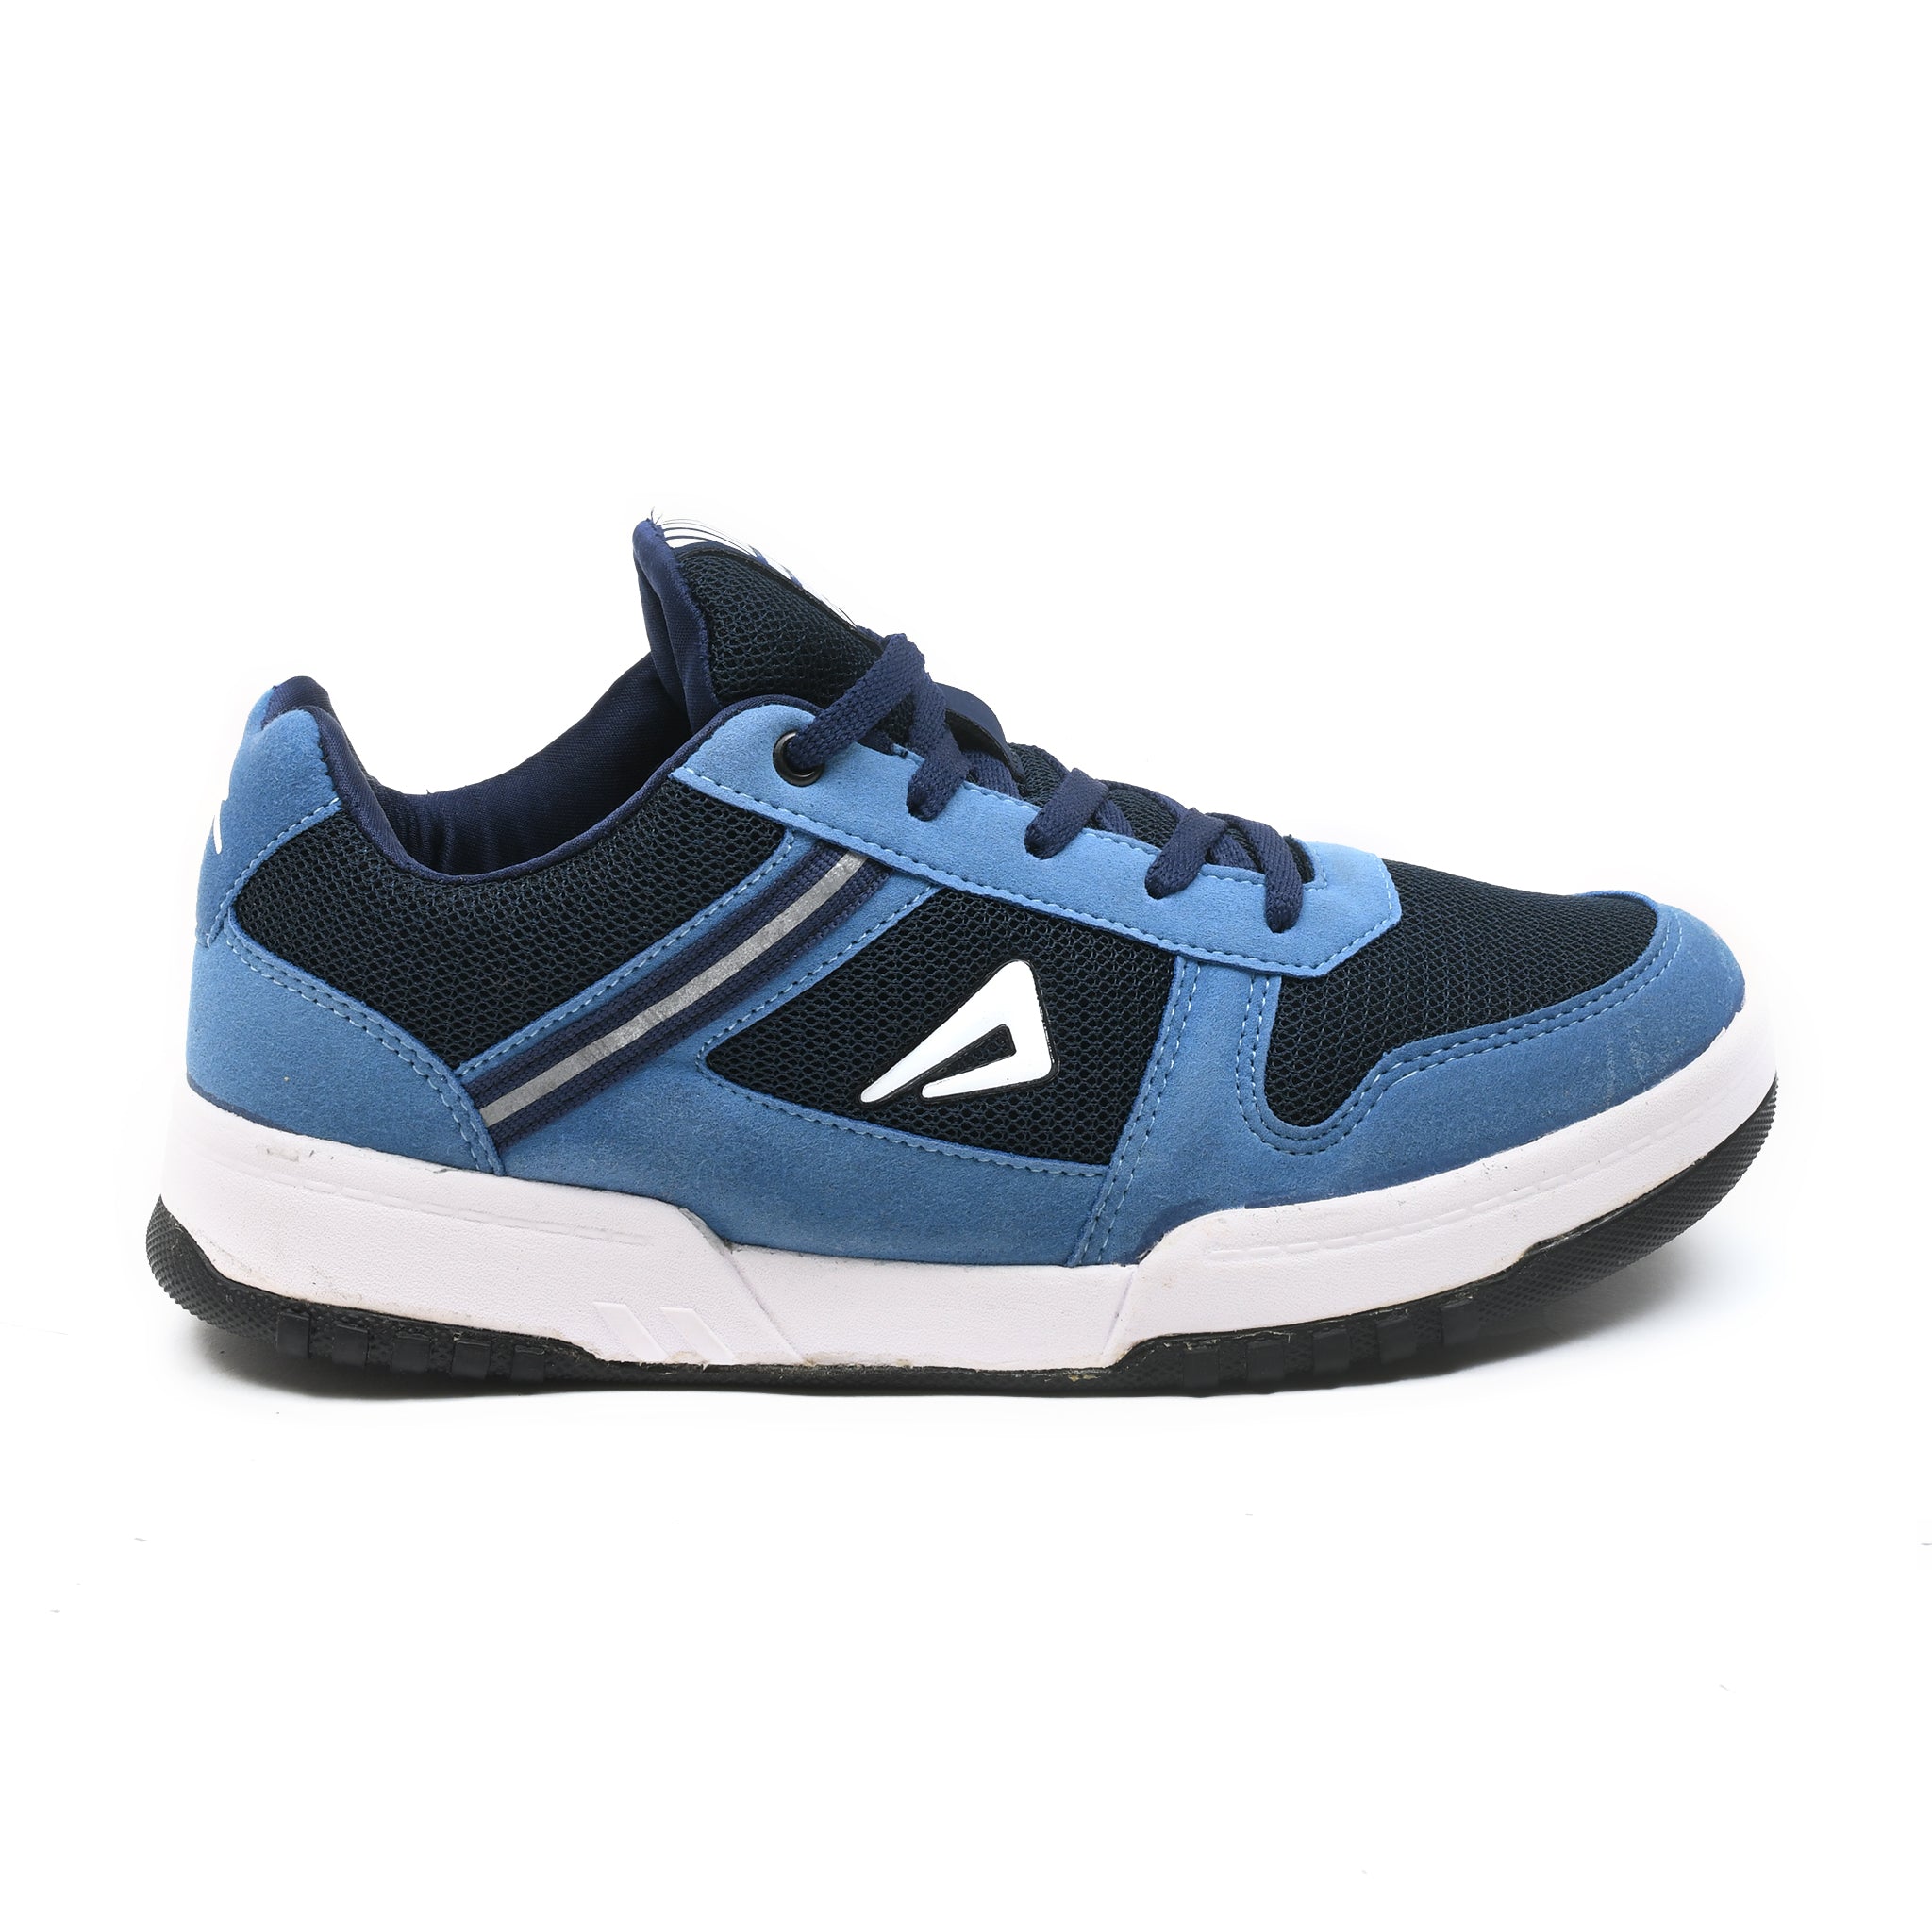 Impakto Flash Men's Blue Running Shoes